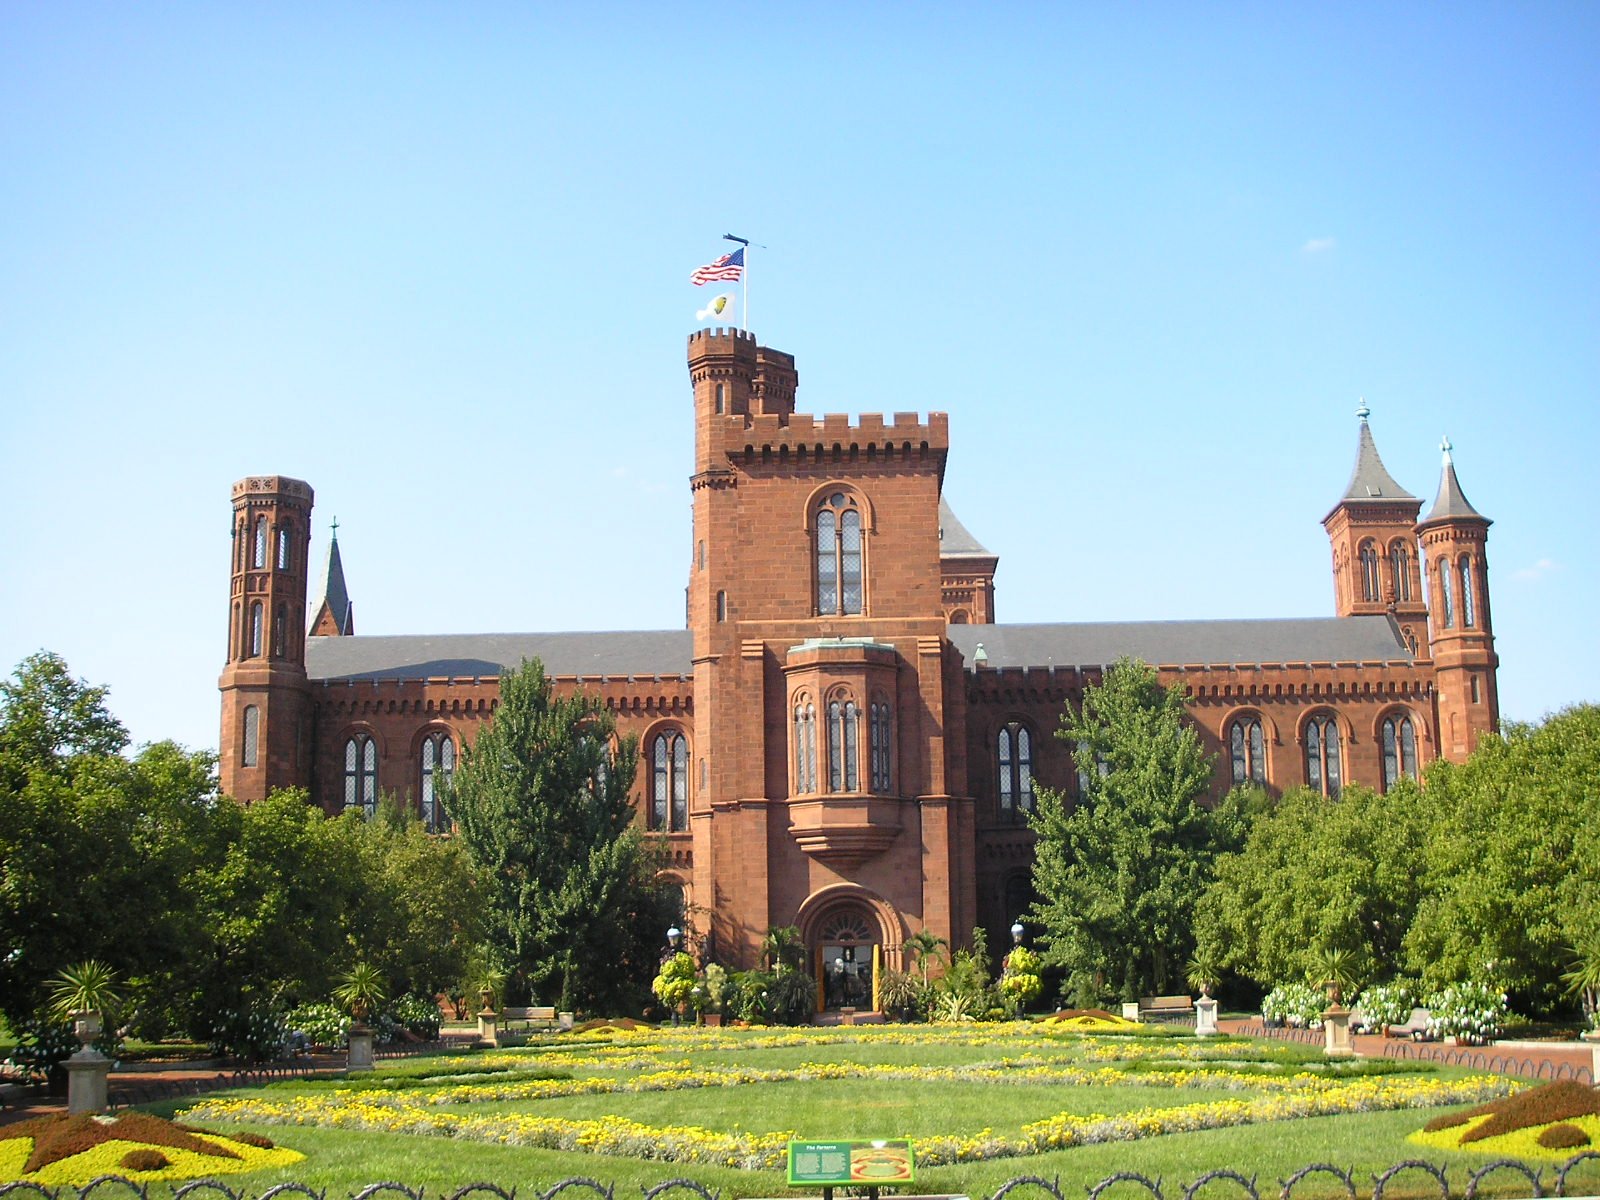 Smithsonian Institution, Washington